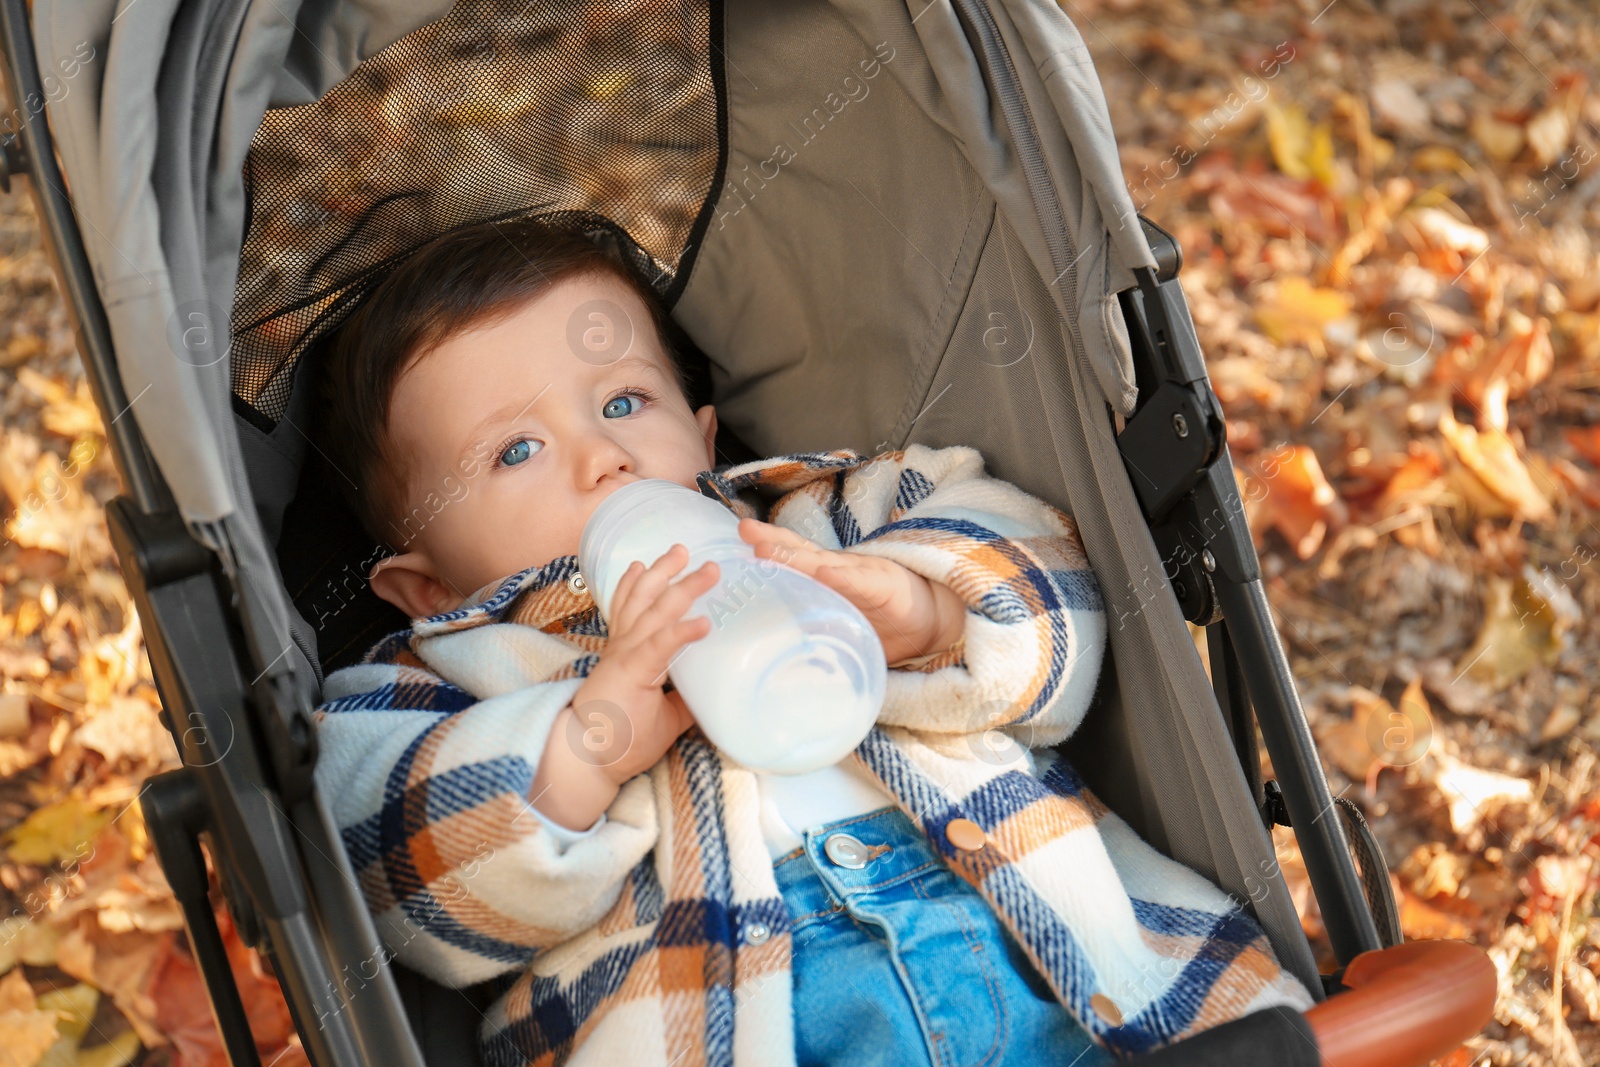 Photo of Cute little child feeding from bottle in stroller outdoors. Autumn season